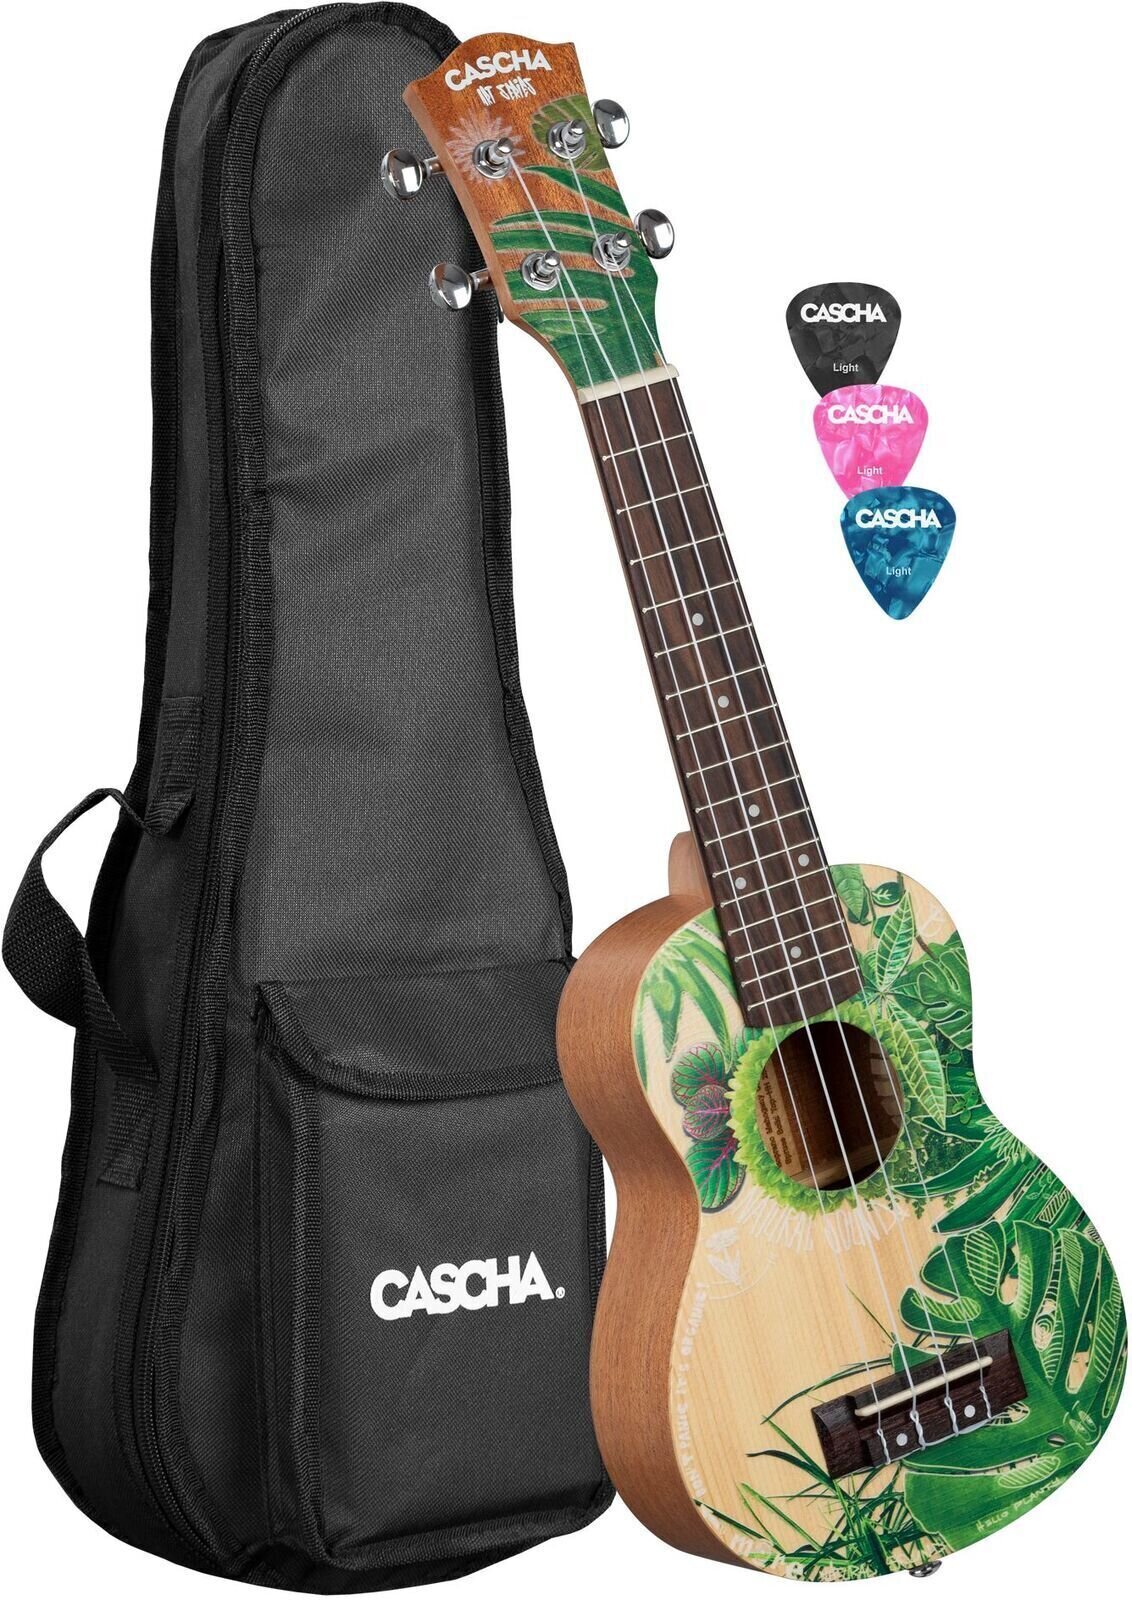 Szoprán ukulele Cascha HH 2602 Art Series Szoprán ukulele Leafy